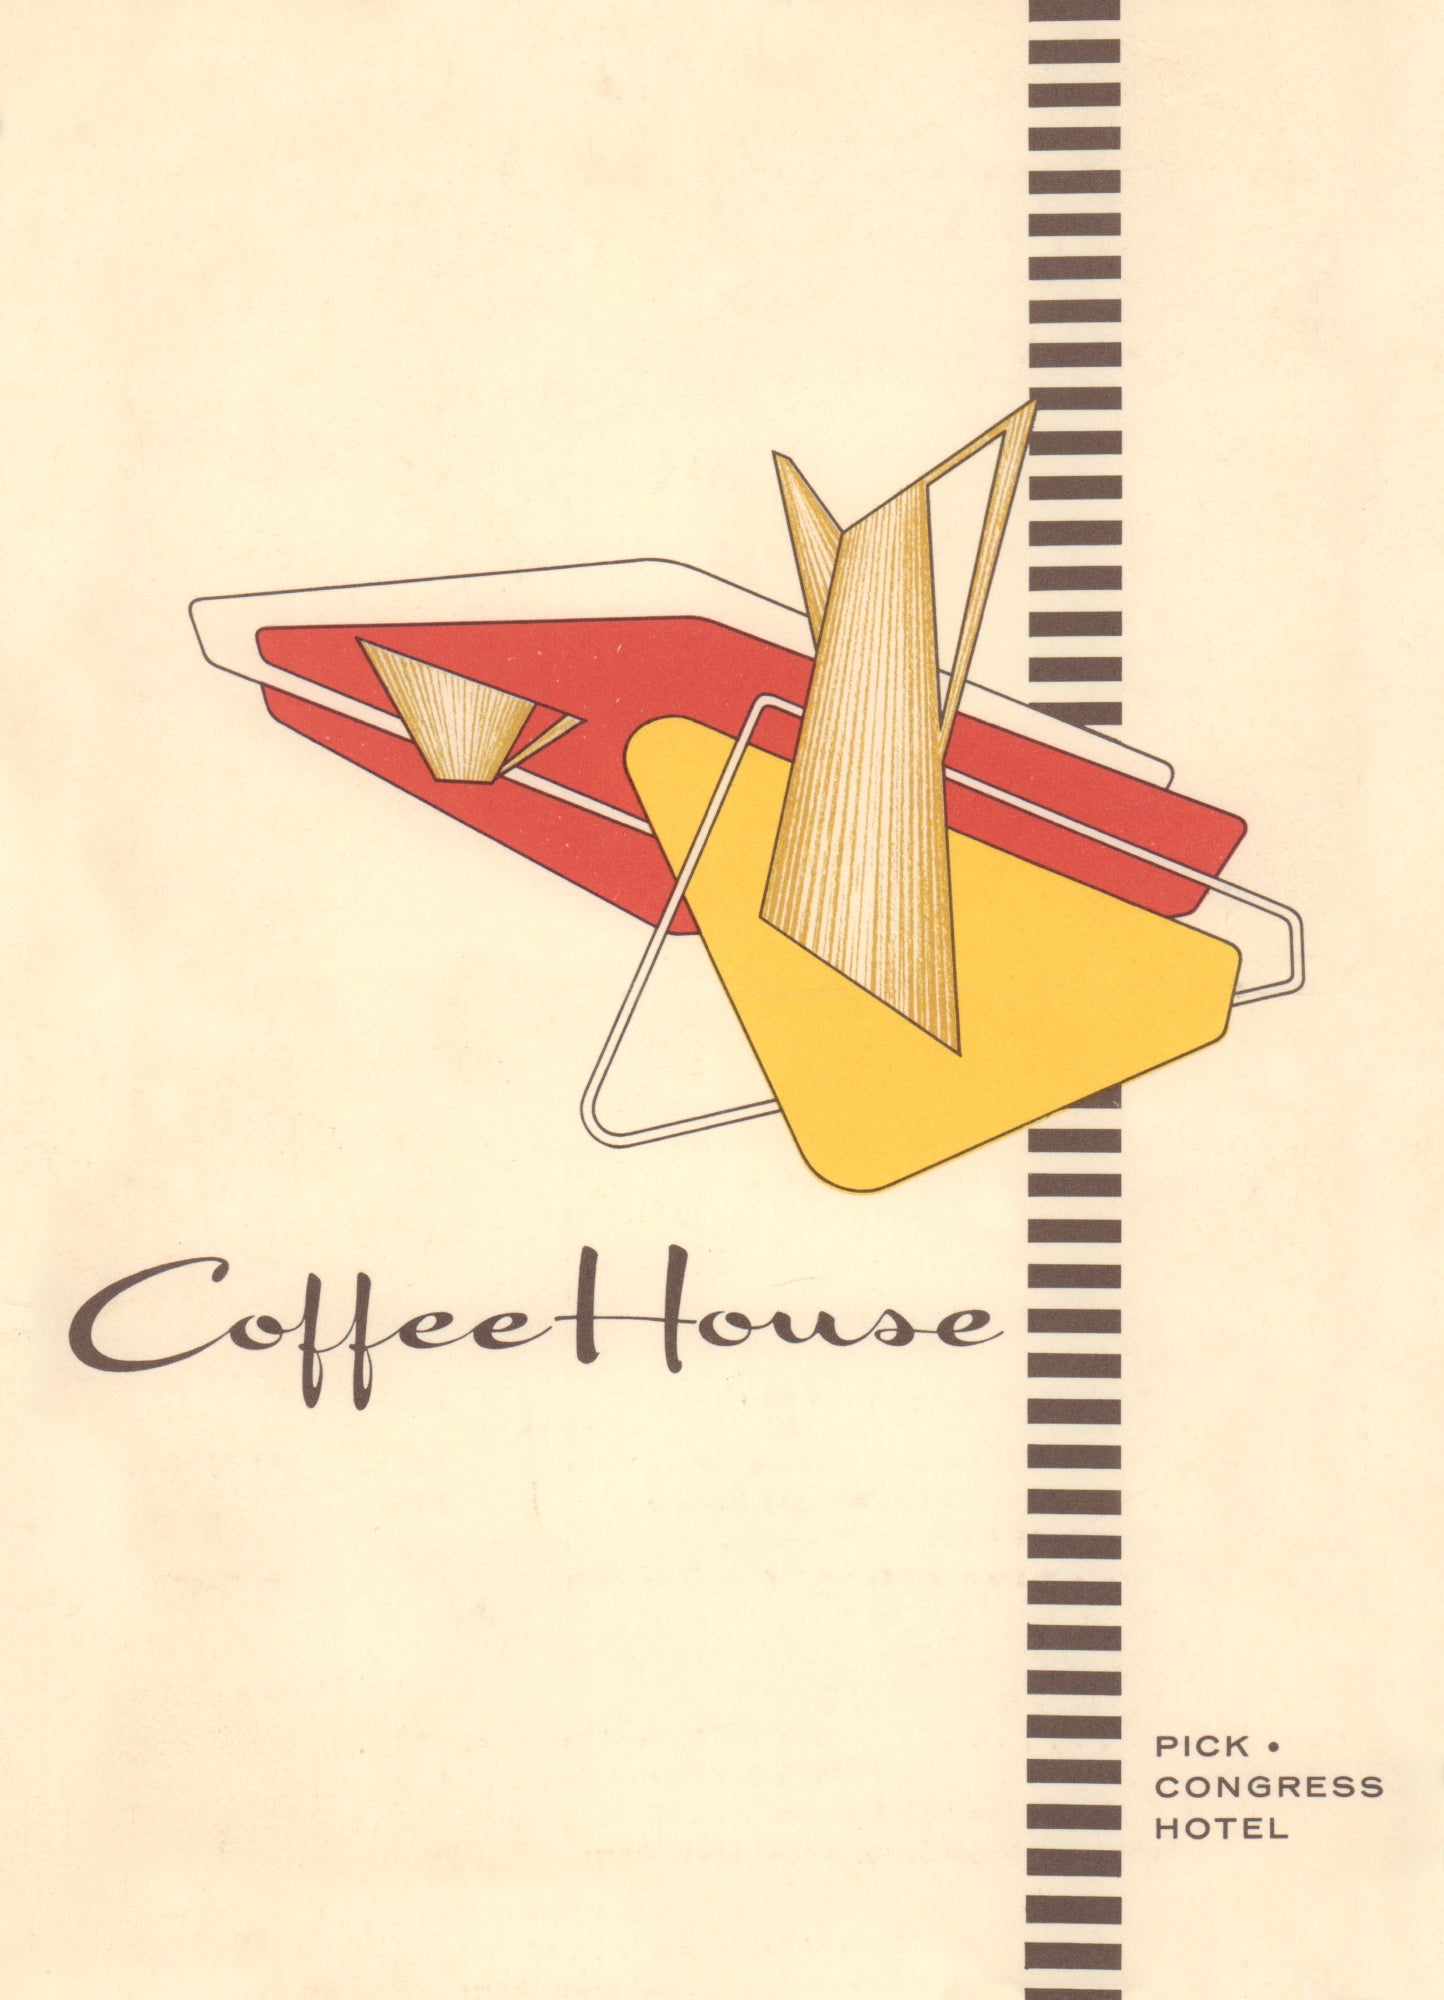 Coffee House, Pick - Congress Hotel, Chicago 1961 Menu Art